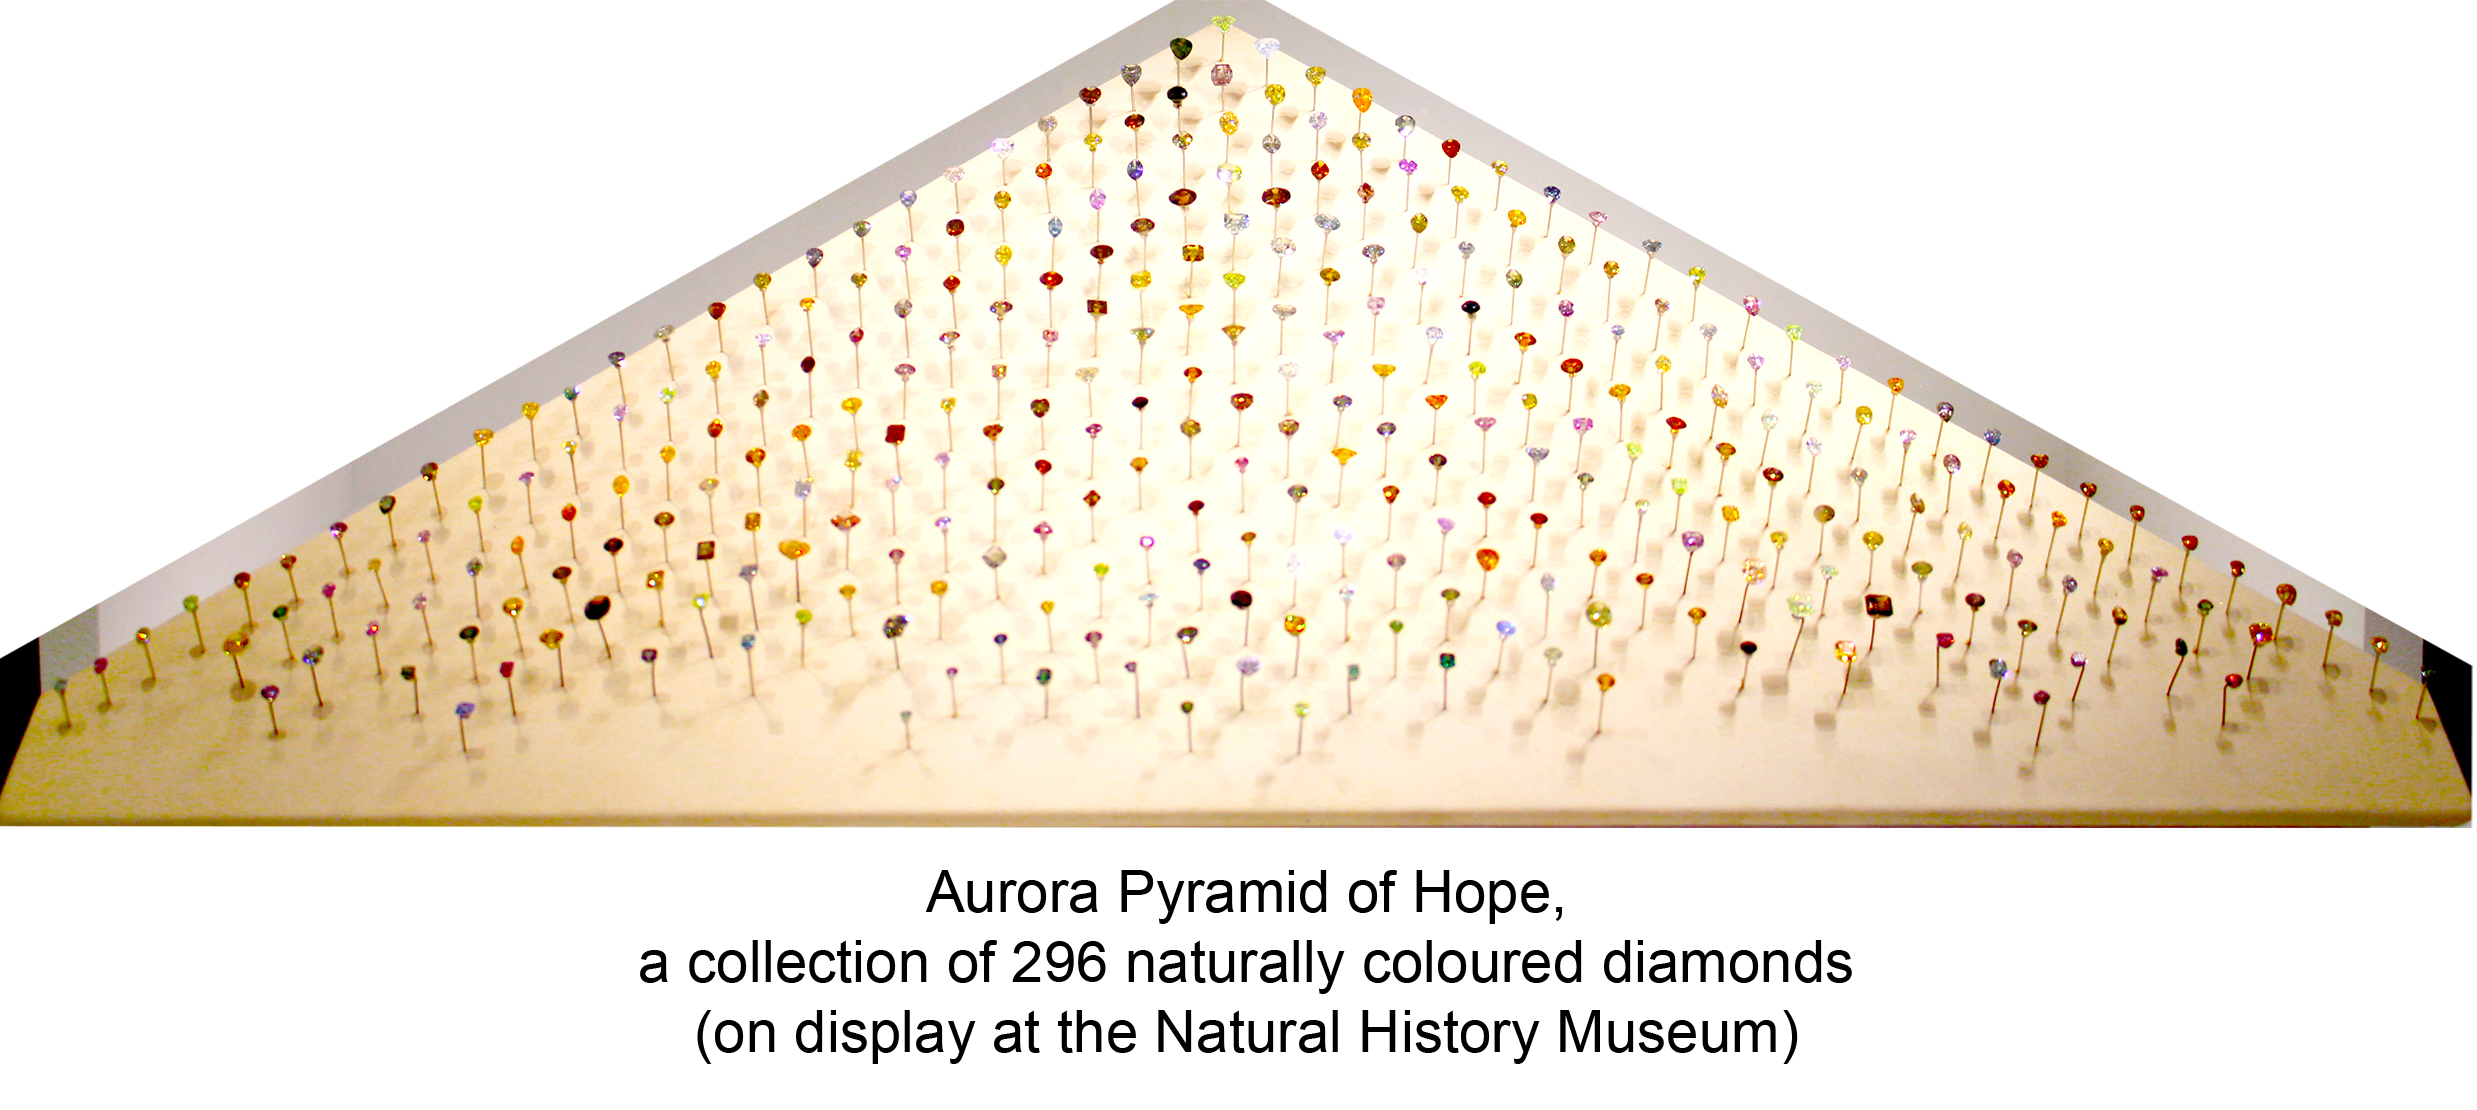 The Aurora pyramid of Hope